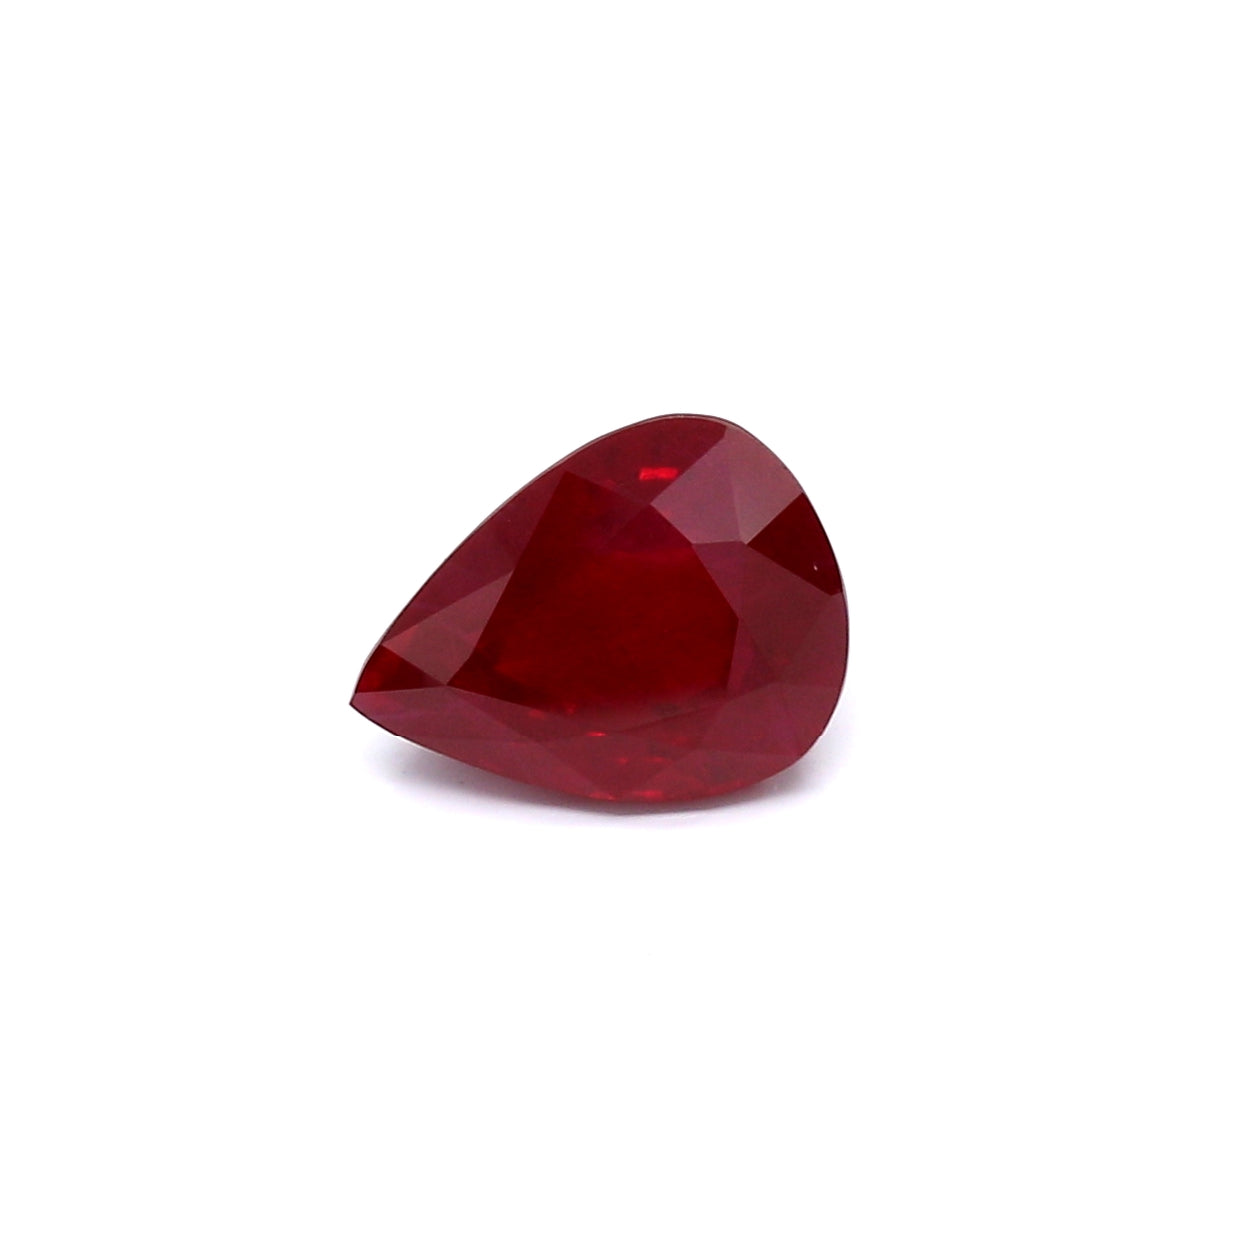 2.10ct Pear Shape Ruby, H(b), Myanmar - 8.81 x 6.09 x 4.50mm